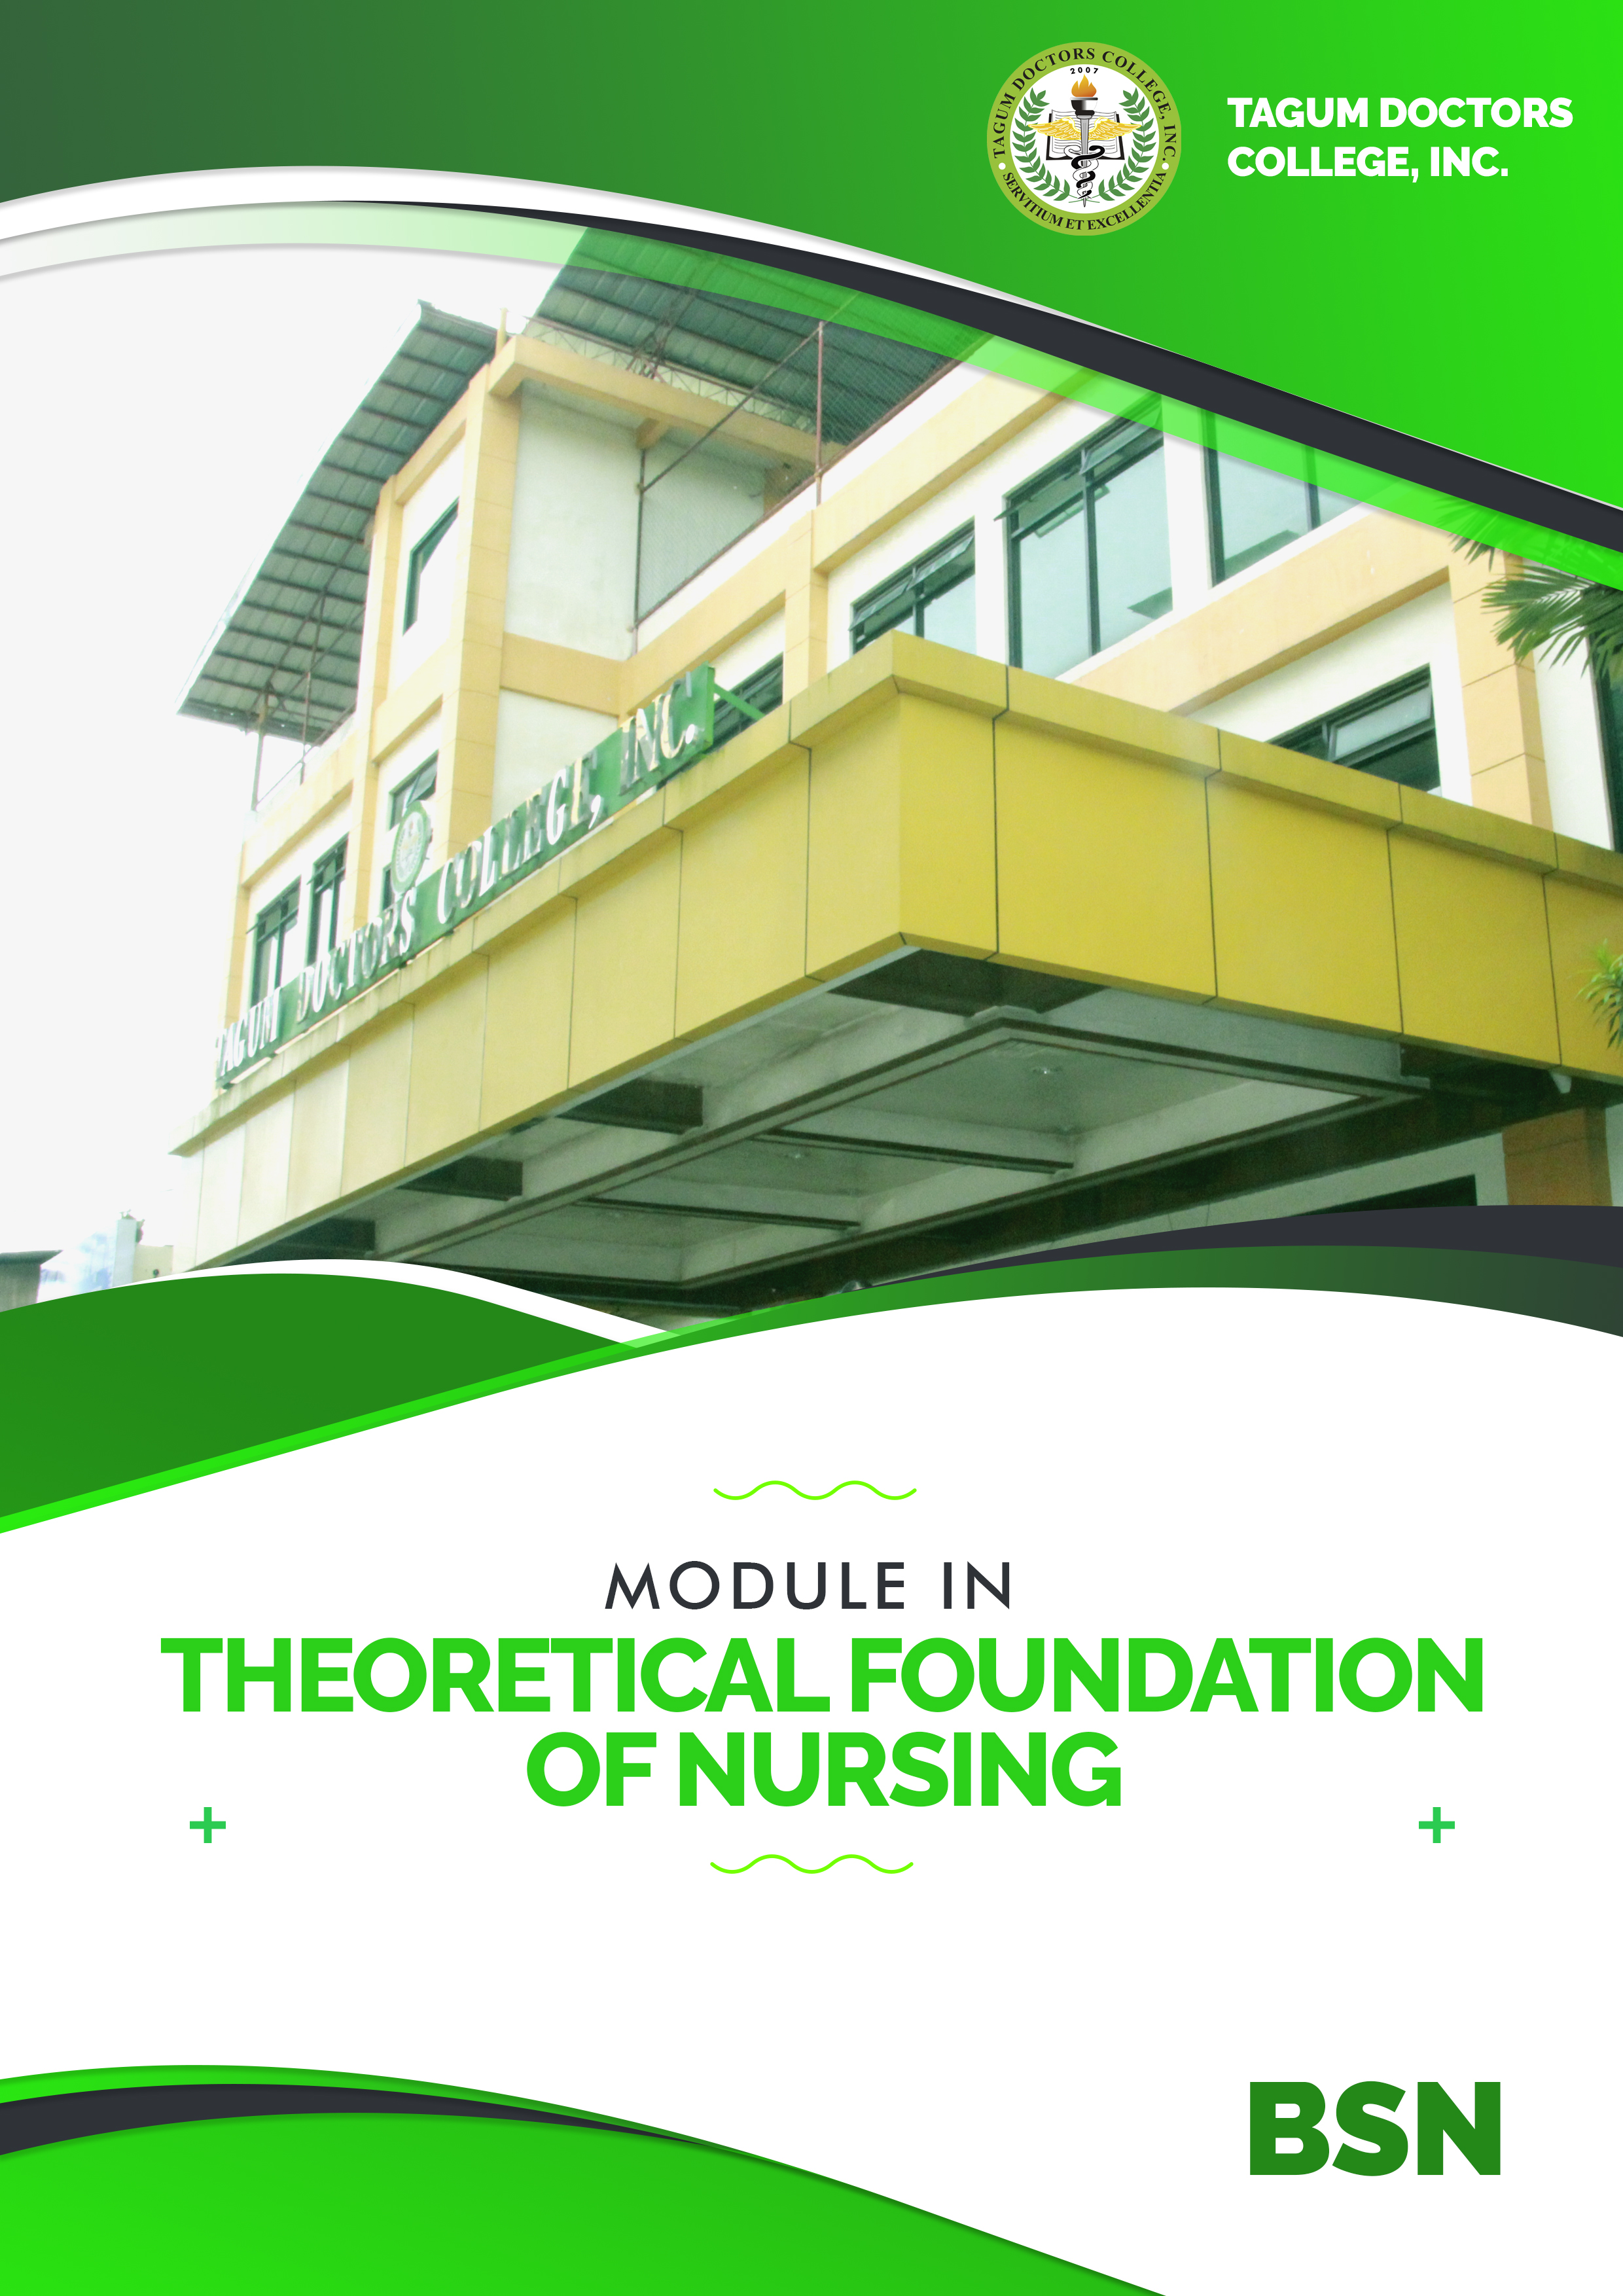 Theoretical Foundations of Nursing - BSN 1-B